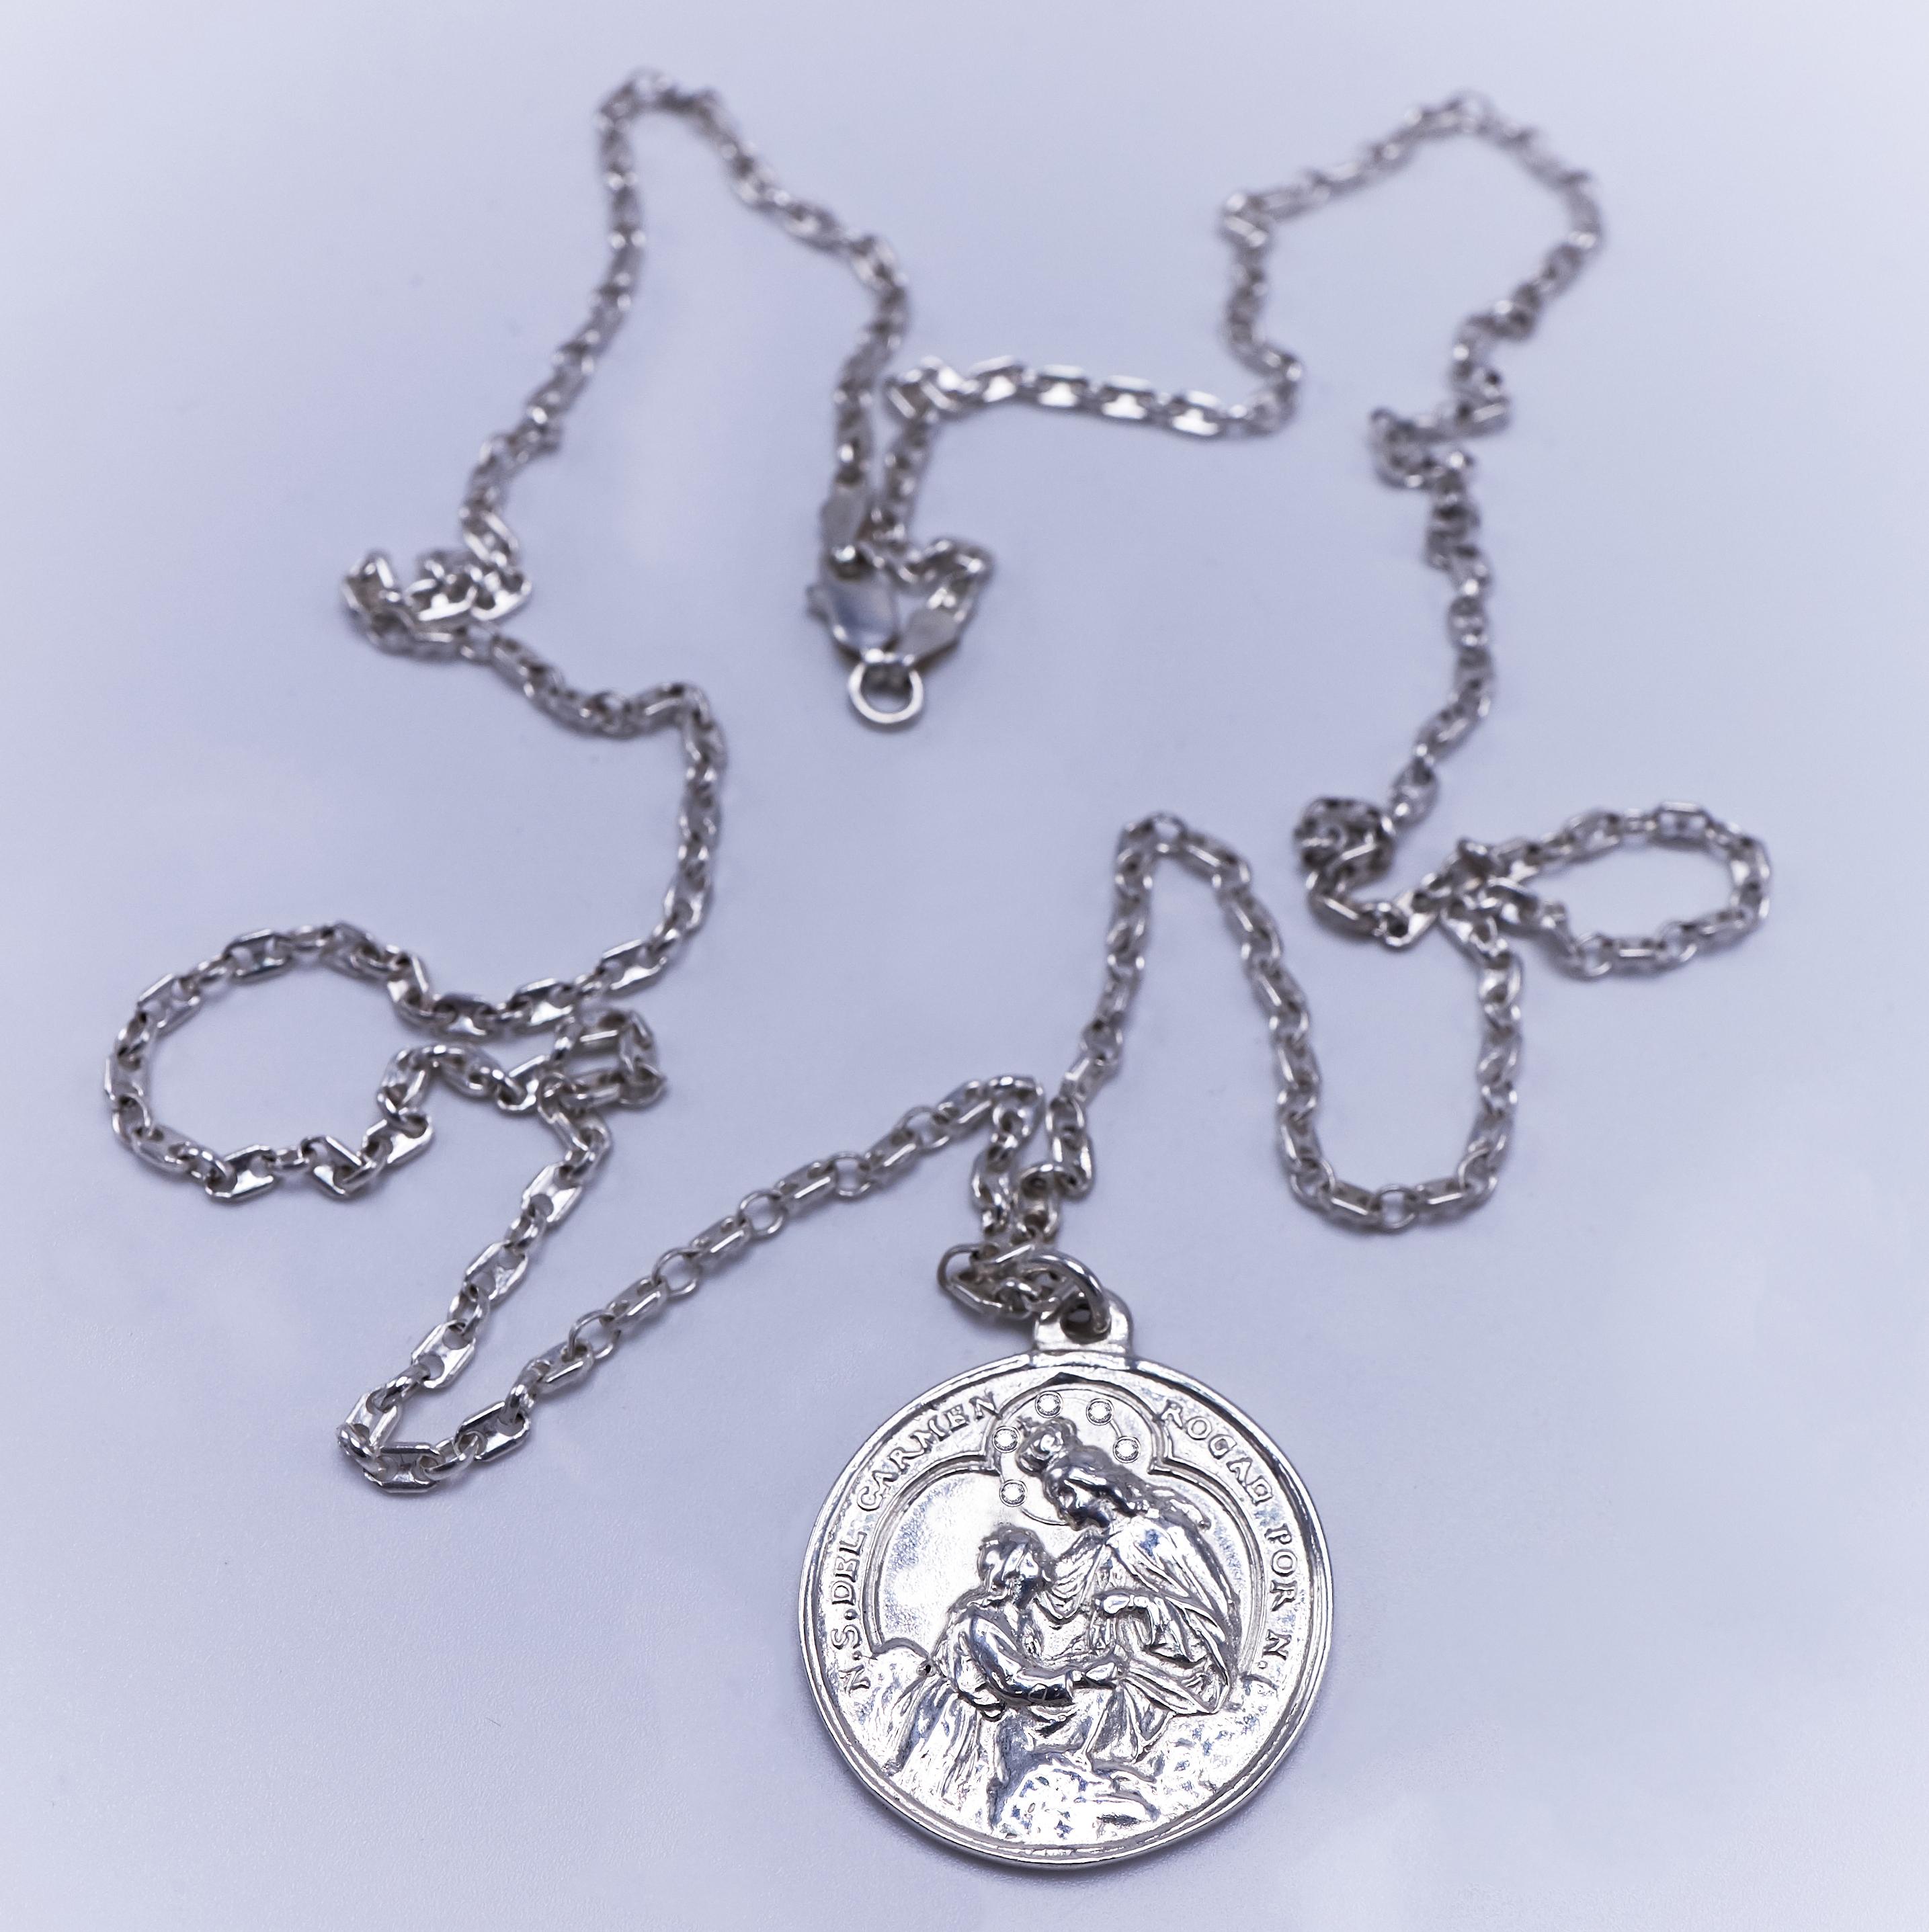 Medaille Kette Halskette wundertätige Jungfrau Maria weiß Diamant Silber J Dauphin

J DAUPHIN Halskette 